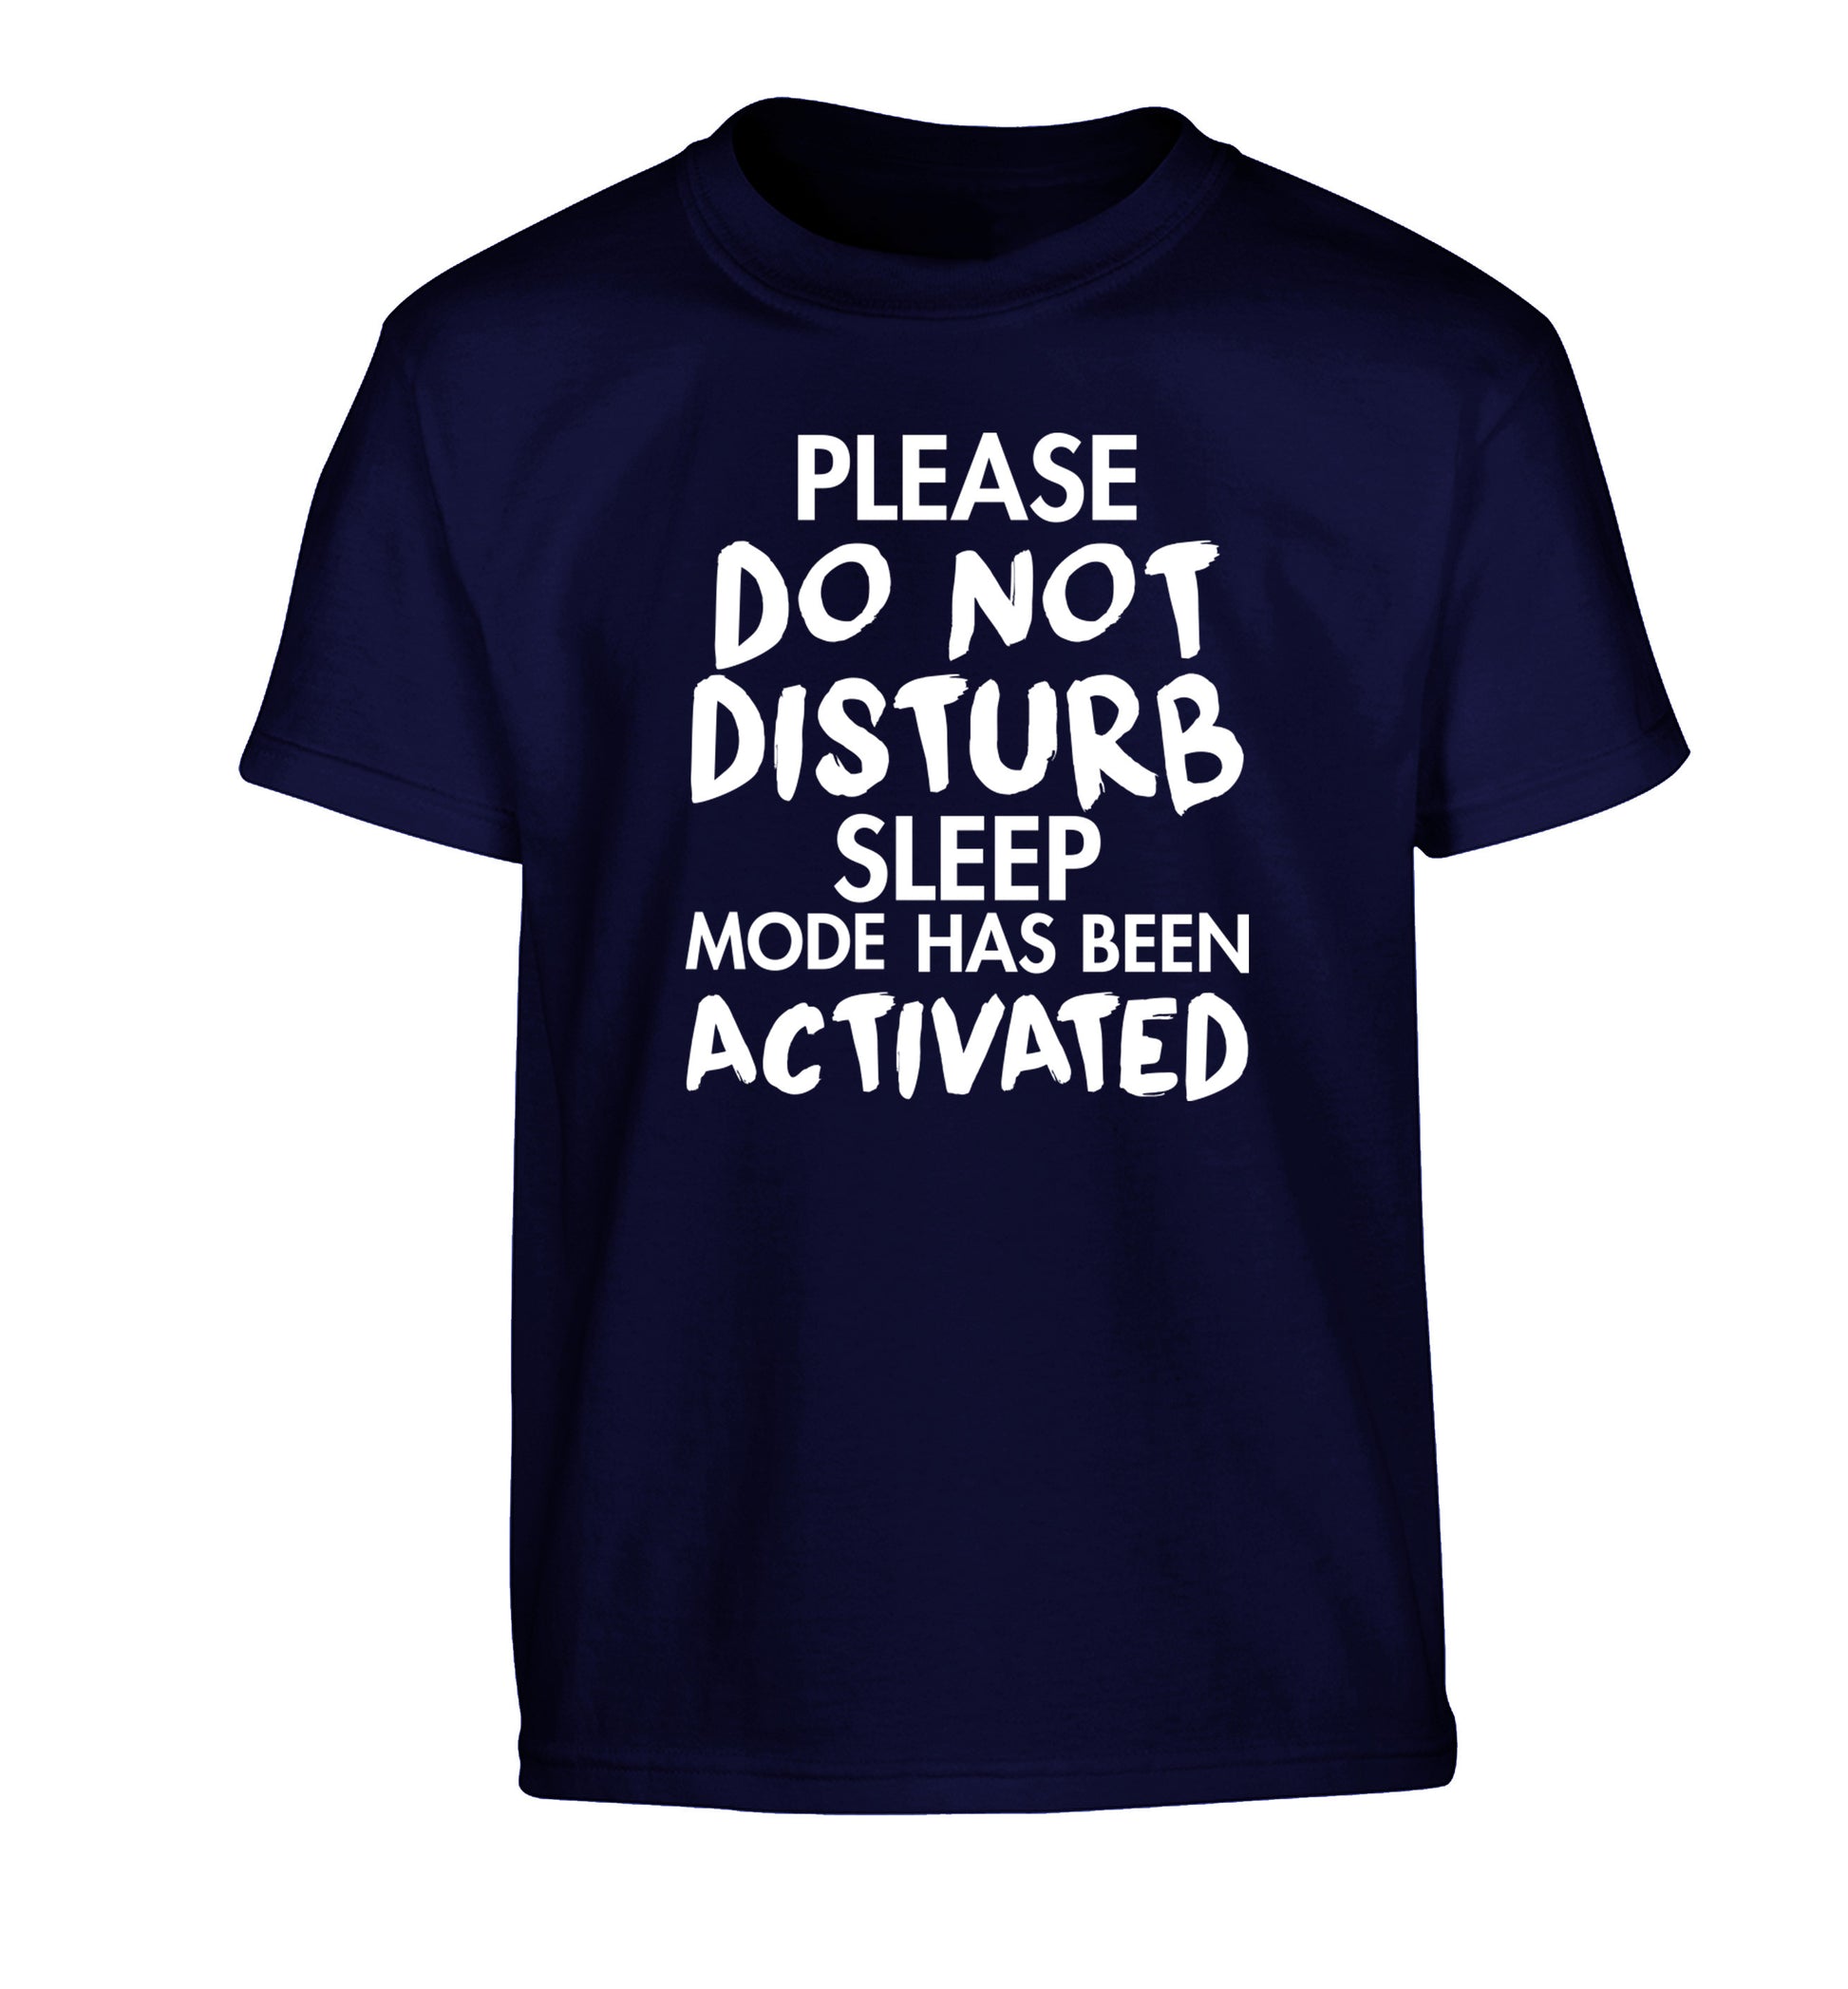 Please do not disturb sleeping mode has been activated Children's navy Tshirt 12-14 Years